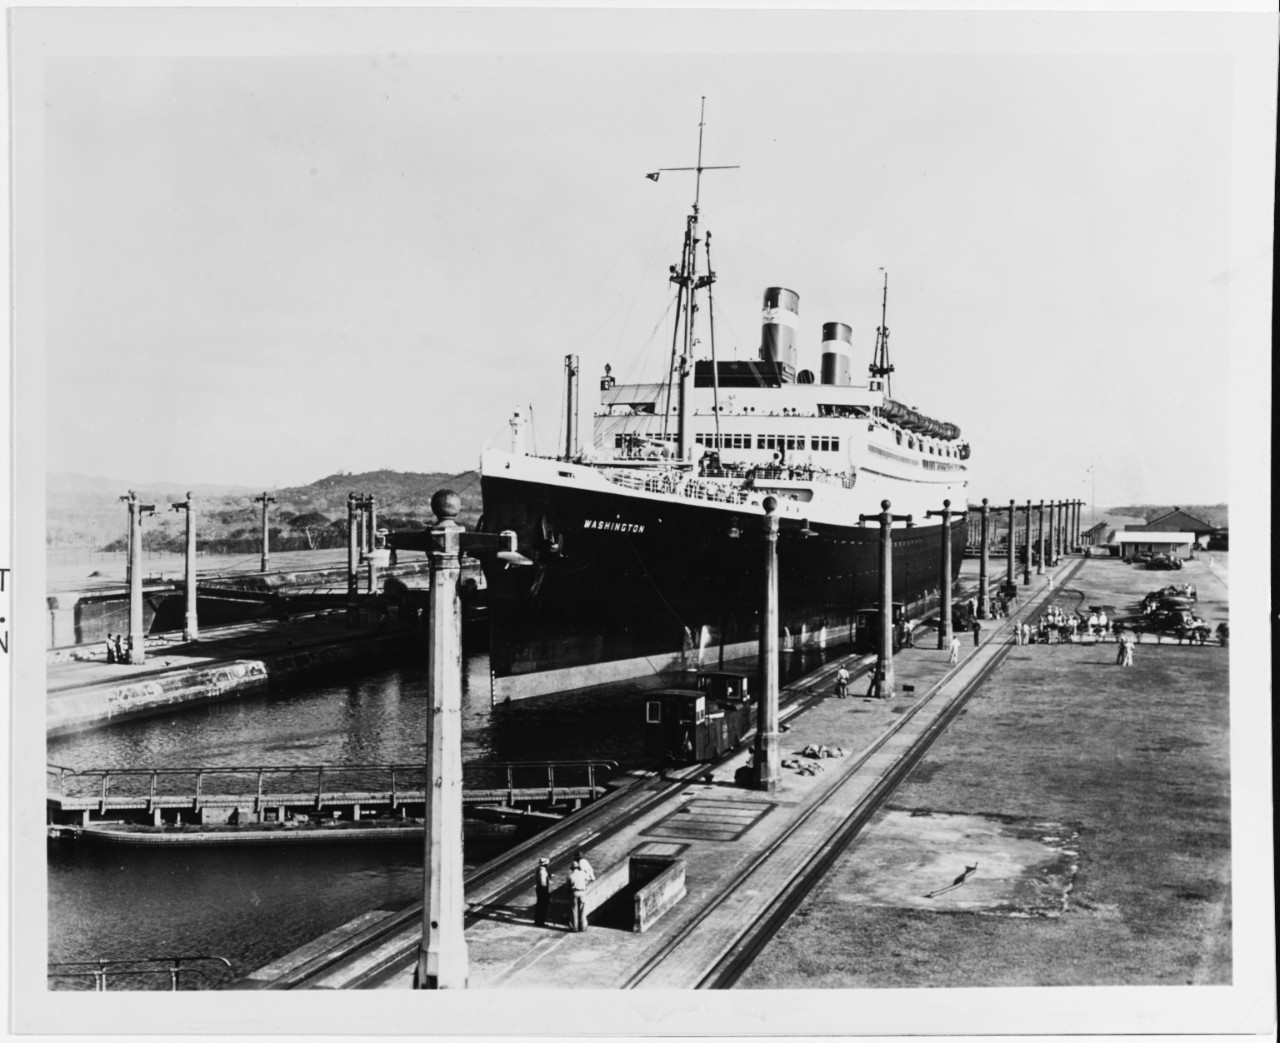 SS WASHINGTON US Passenger Ship, 1933-65